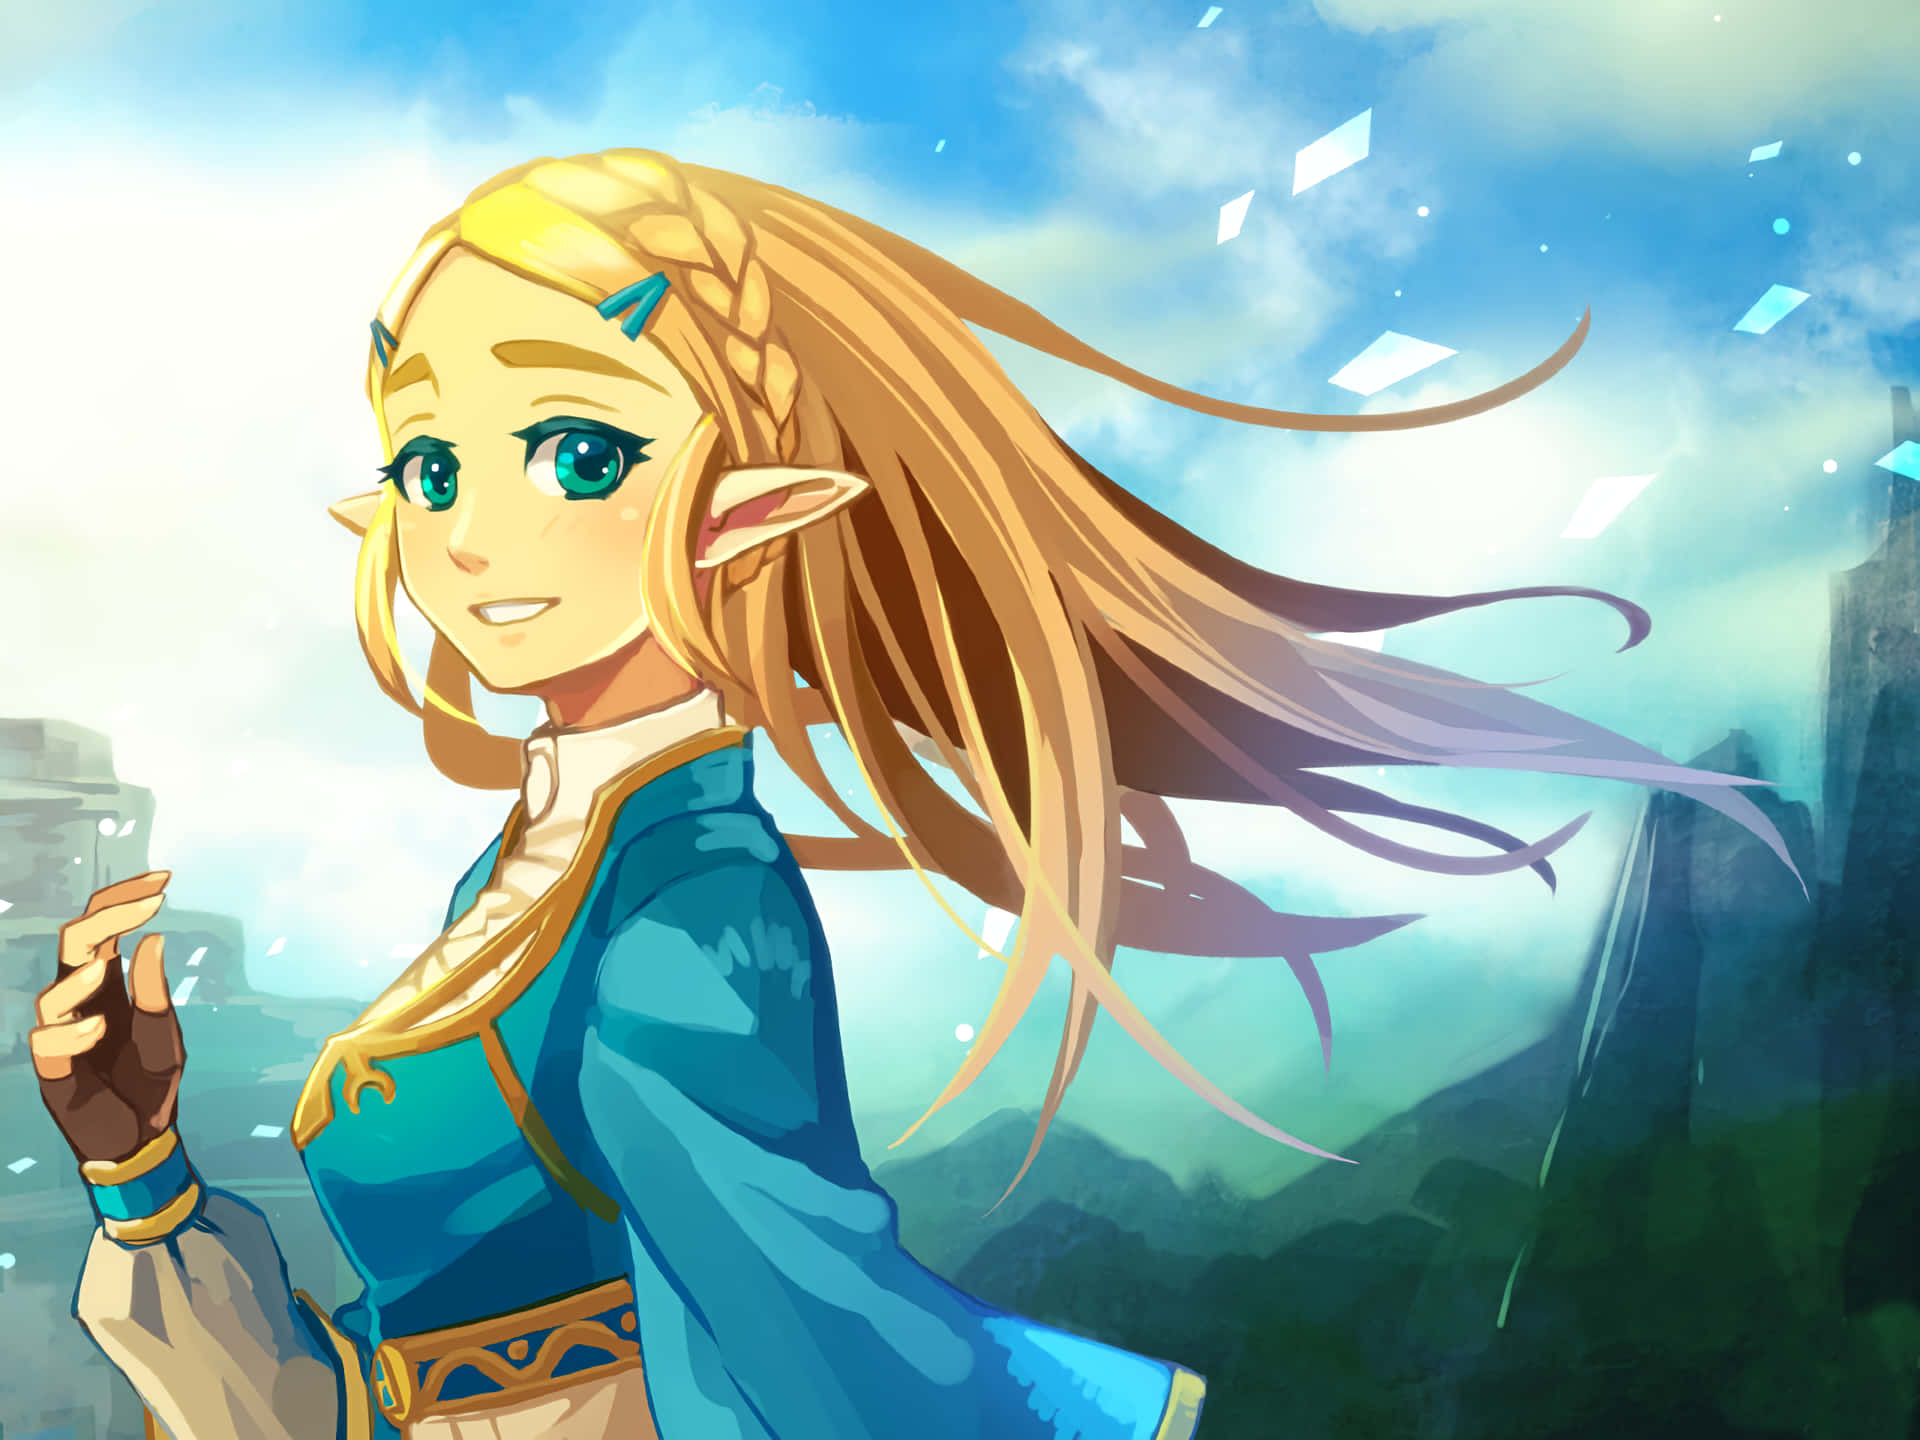 Link explores the depths of Hyrule Castle in The Legend of Zelda: Breath of the Wild Wallpaper